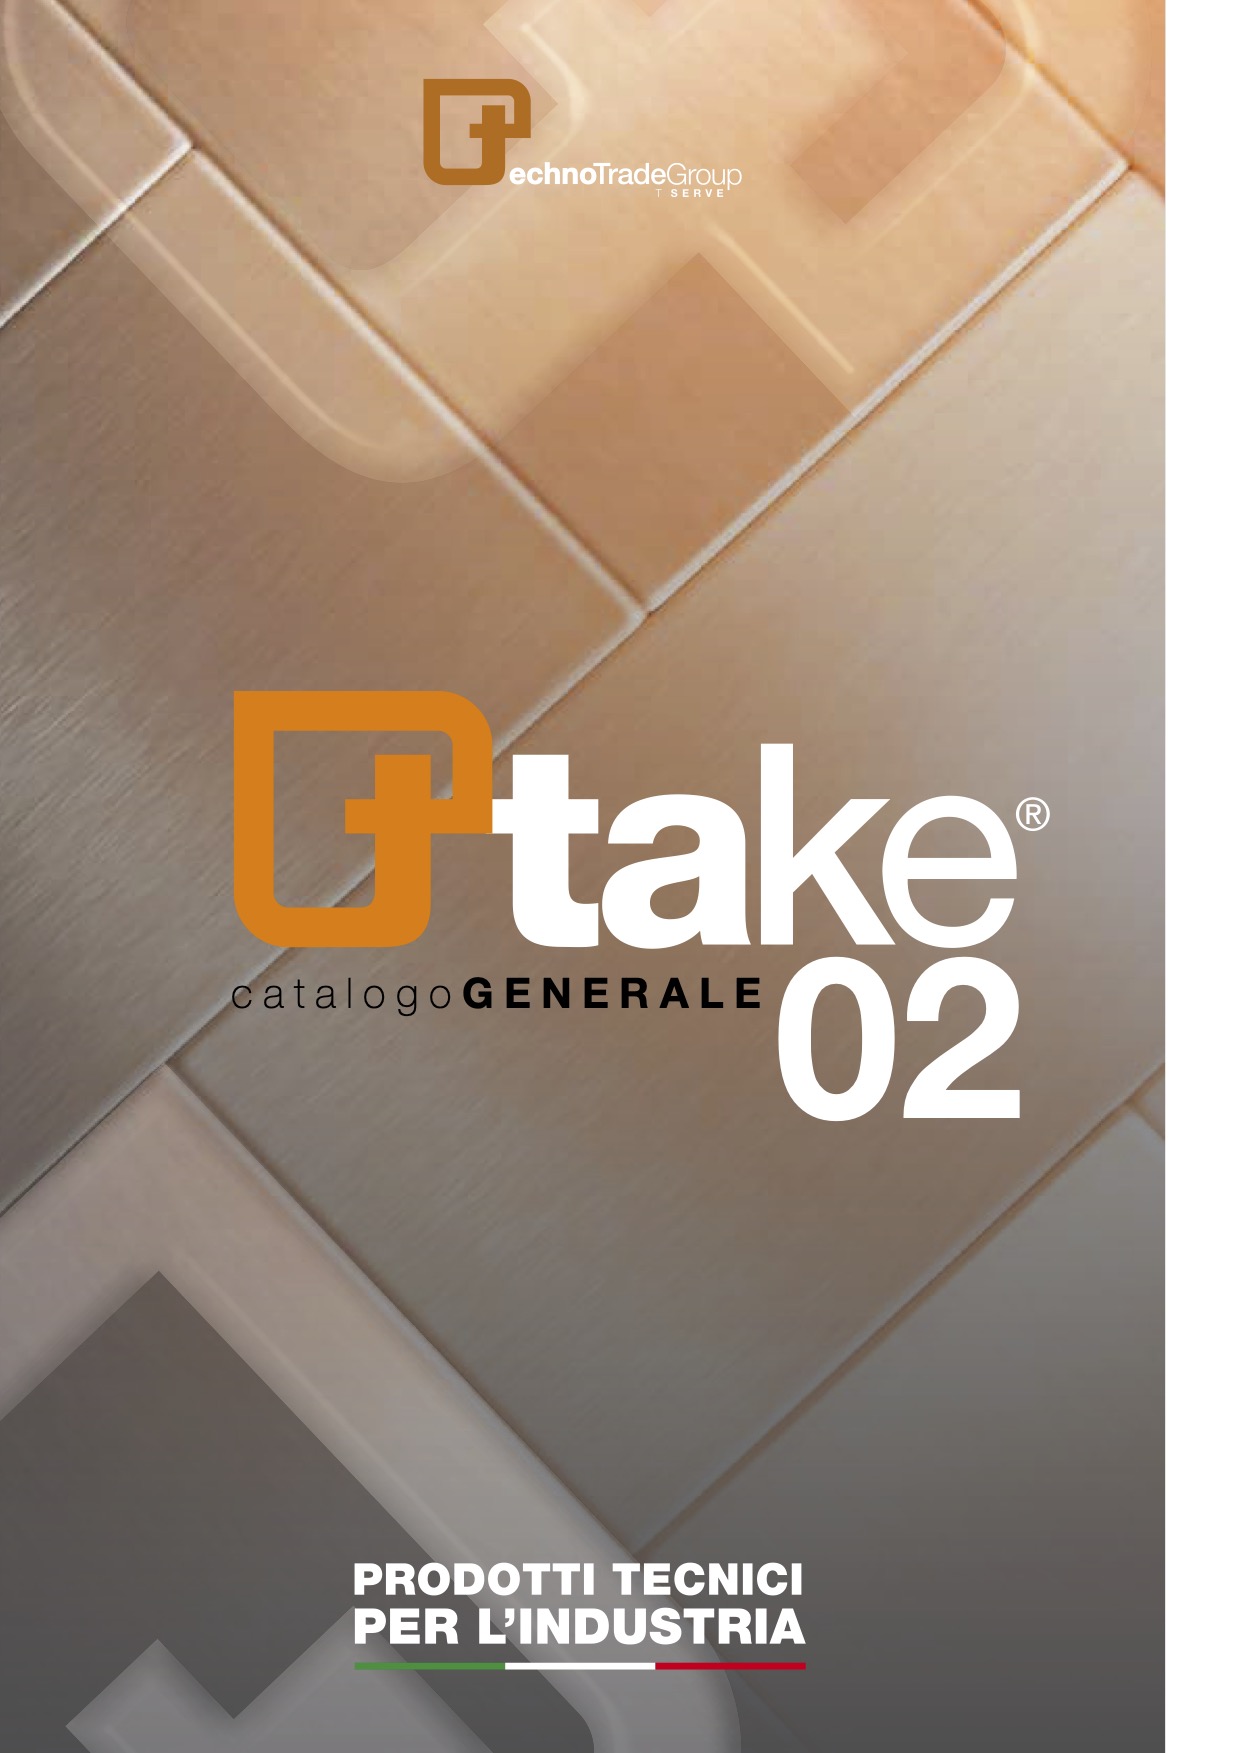 Catalogo Generale 02 Ttake 